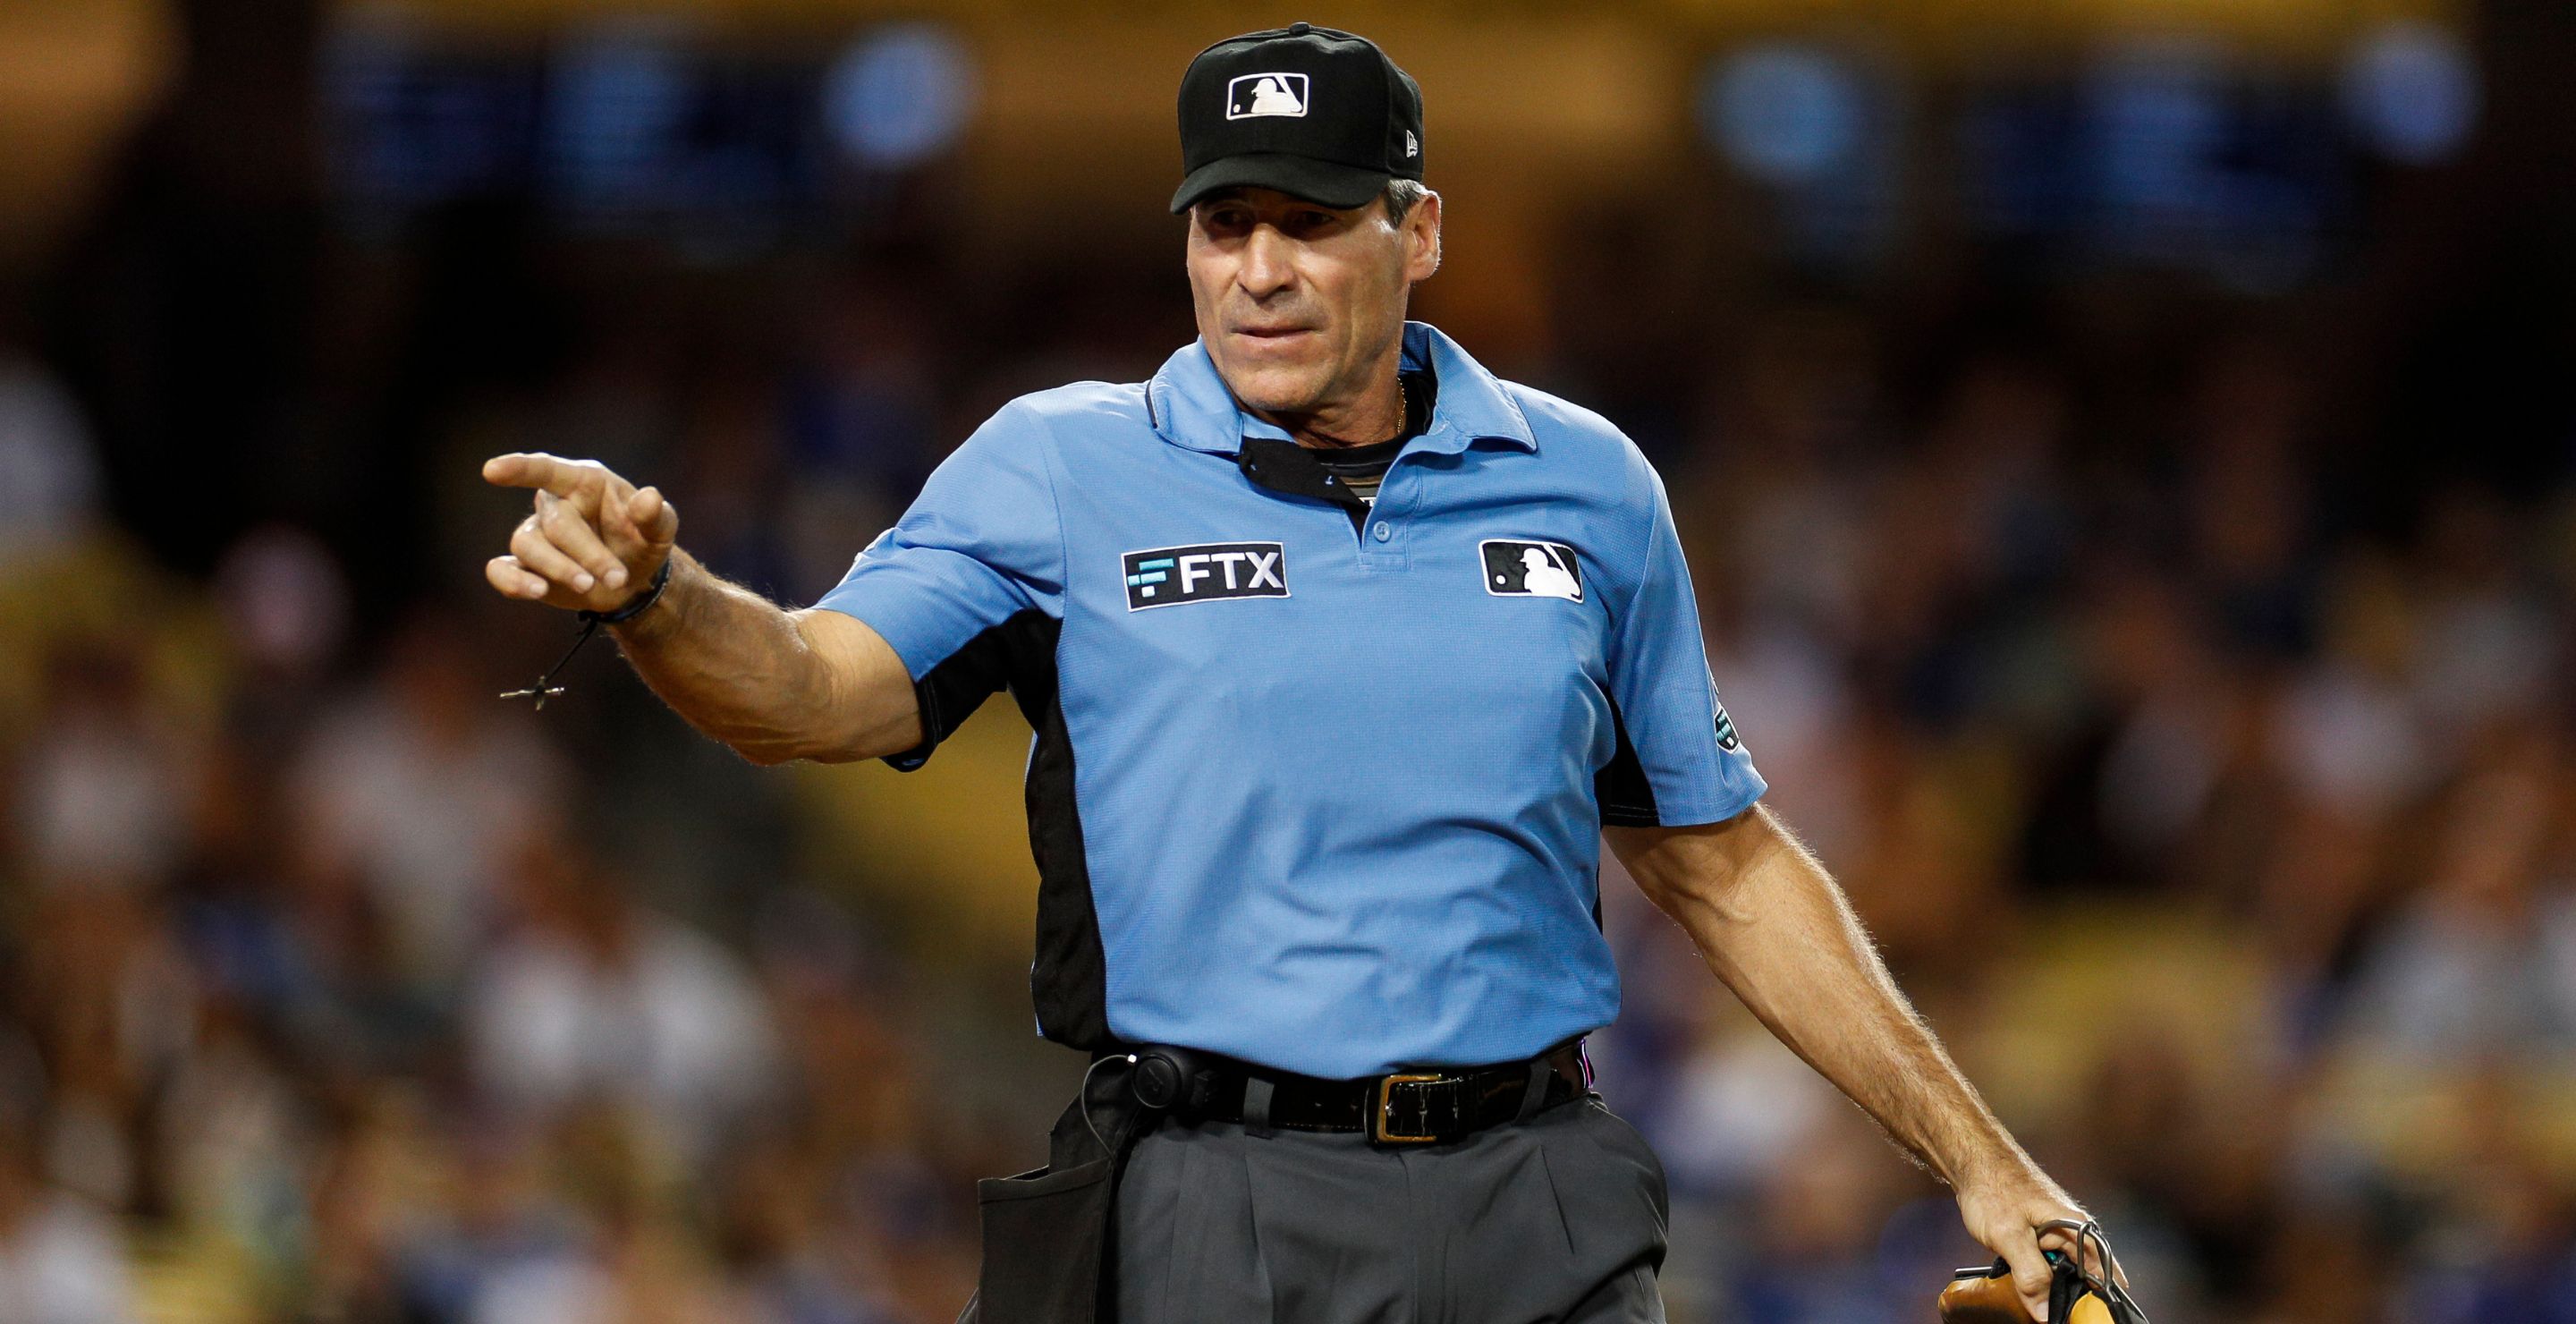 MLB: Umpire Hernandez blew calls, losing World Series job